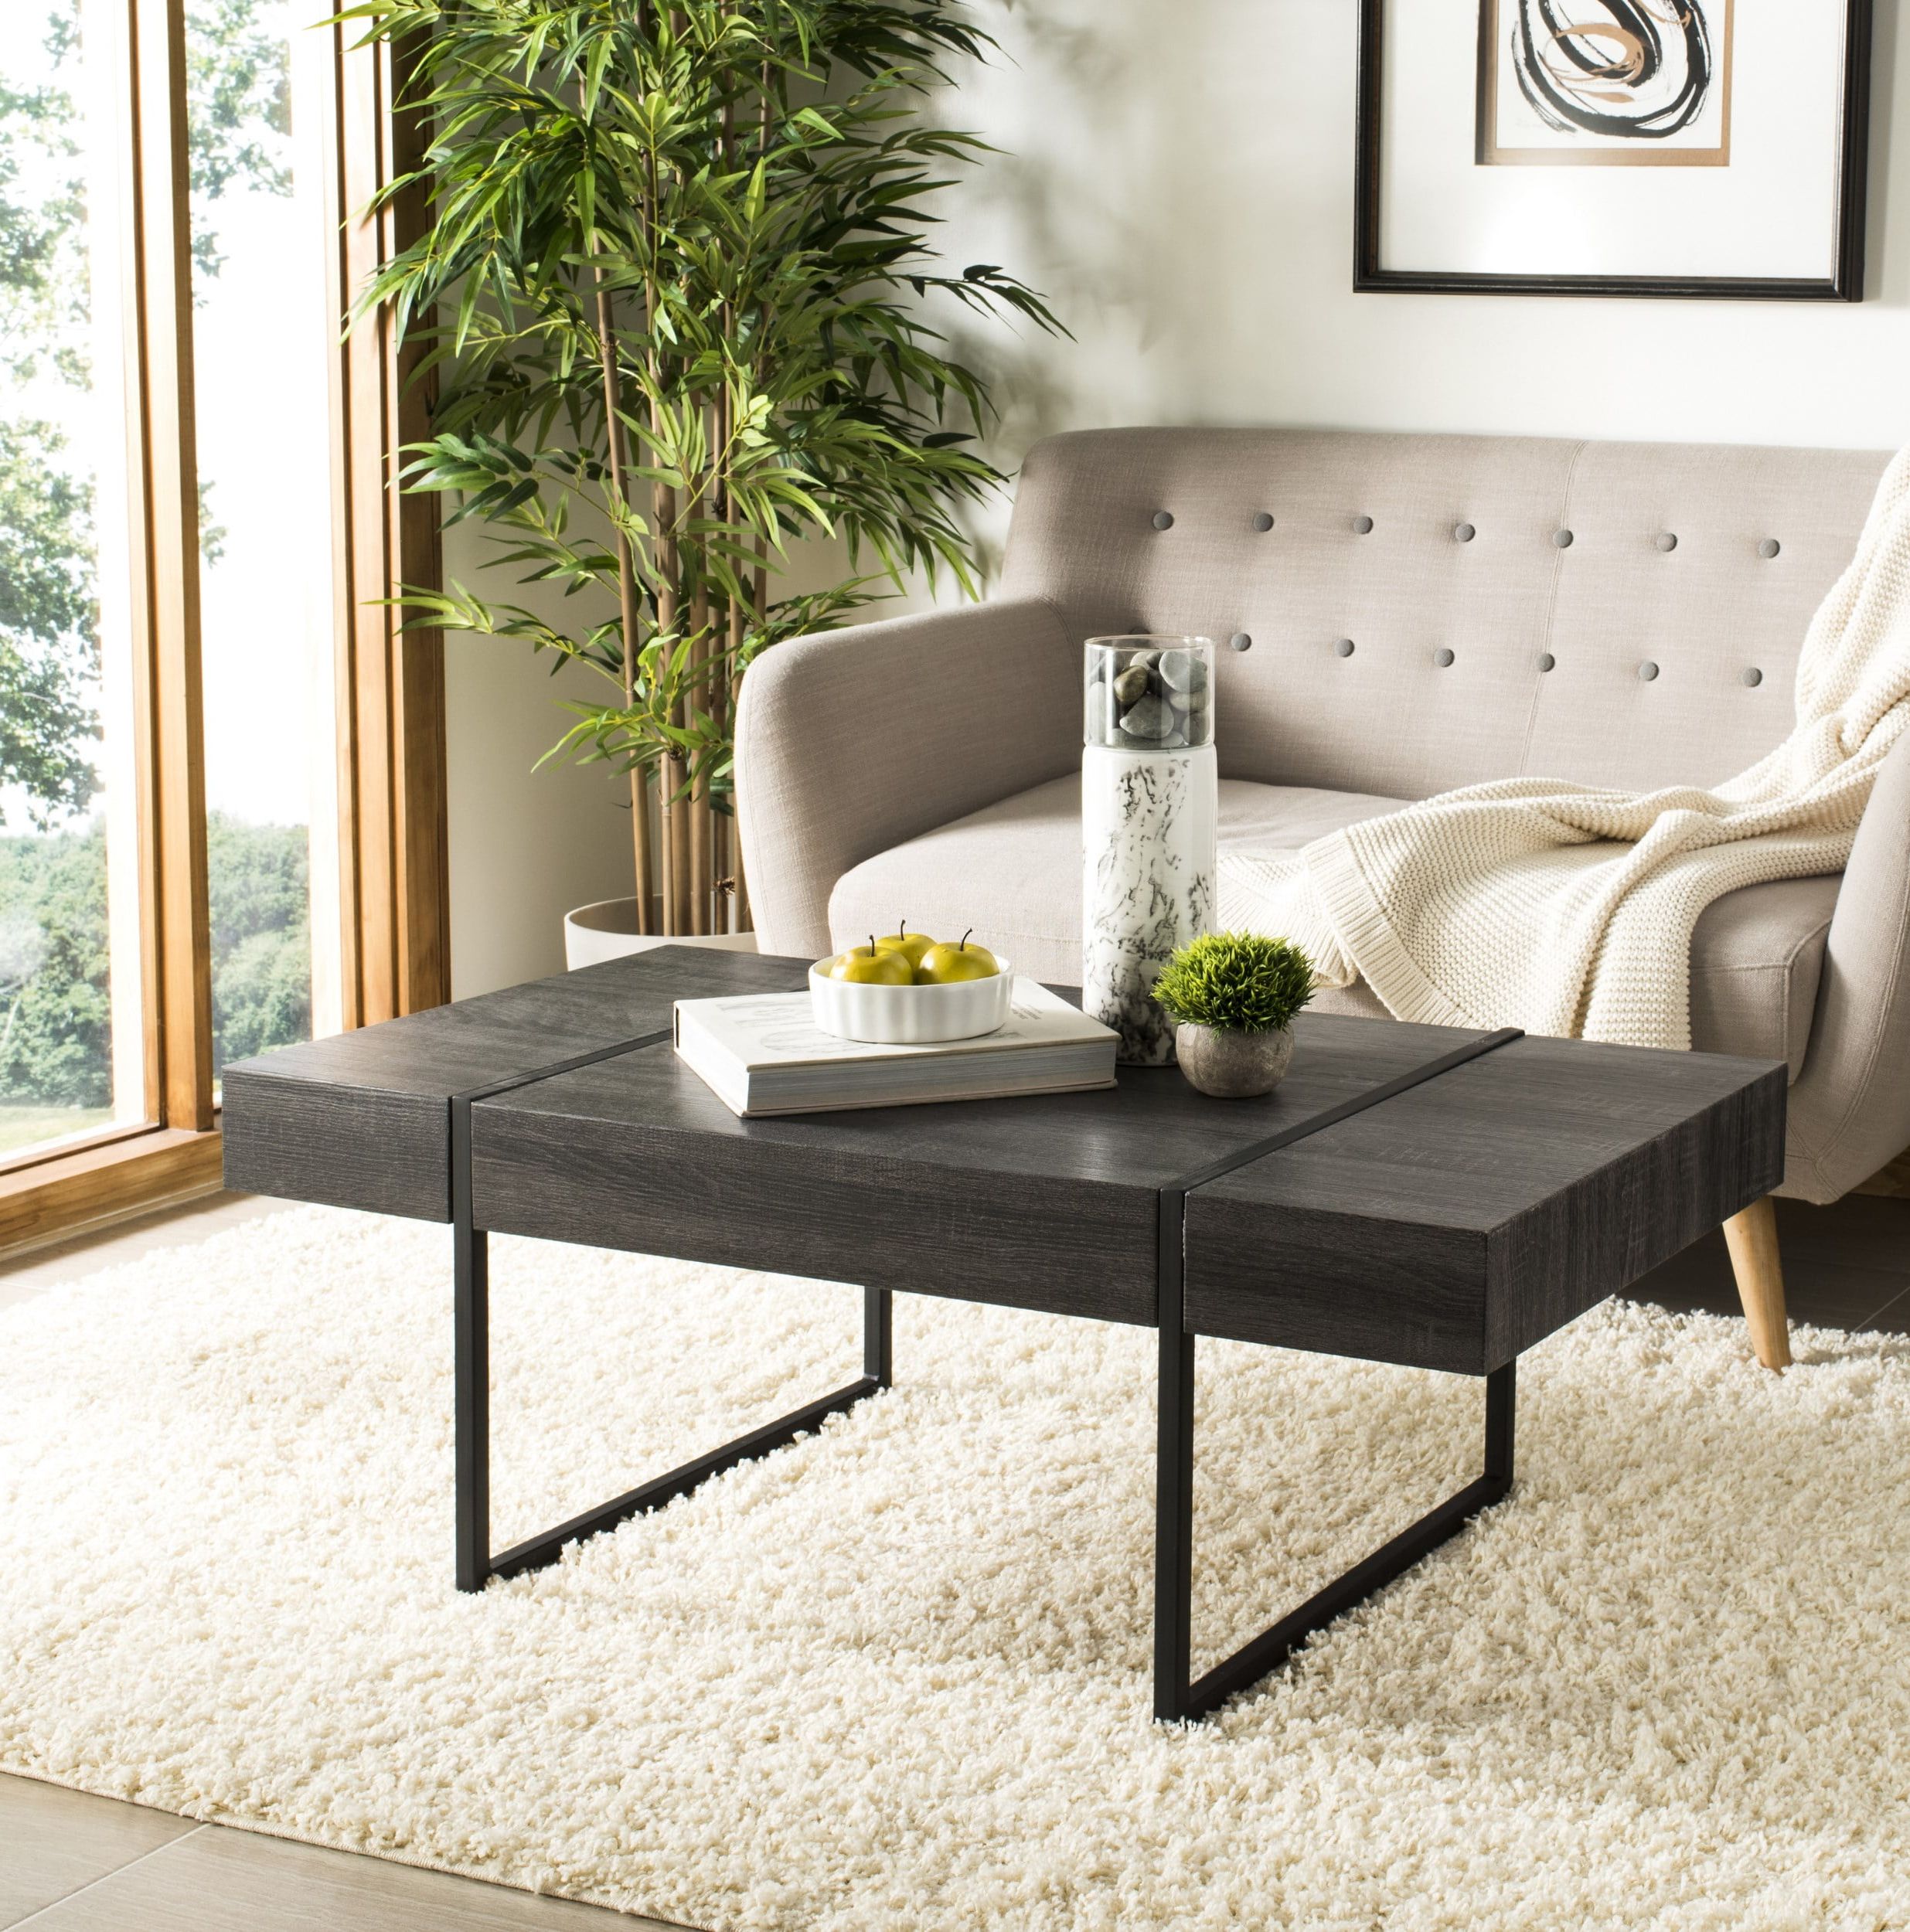 Safavieh Tristan Rectangular Modern Coffee Table Black – Walmart For Rectangular Coffee Tables With Pedestal Bases (Gallery 1 of 20)